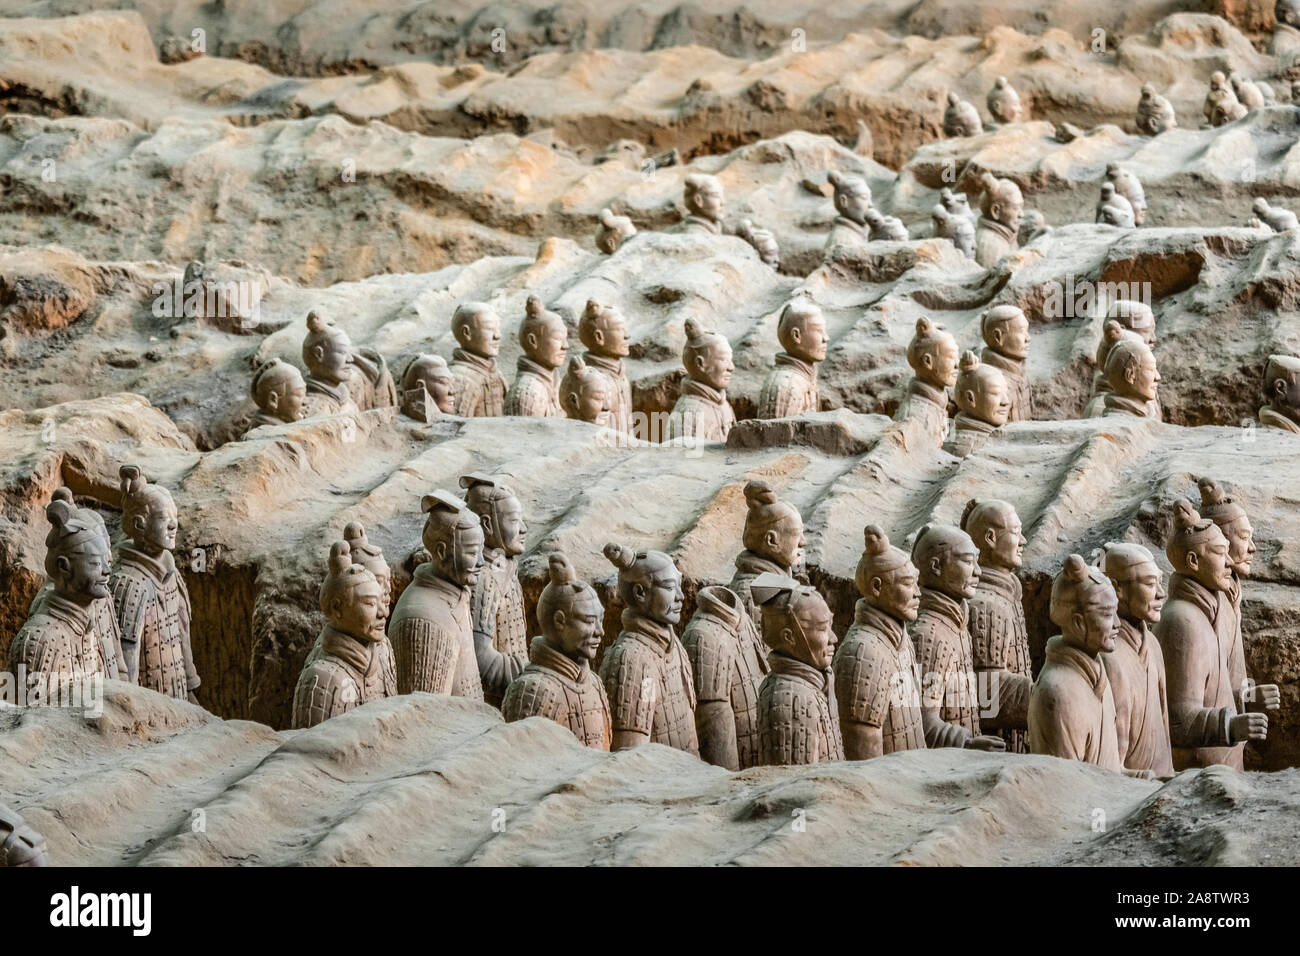 Sculture scavate le statue di terracotta di soldati dell esercito di Qin Shi Huang imperatore, Xian, Shaanxi, Cina Foto Stock